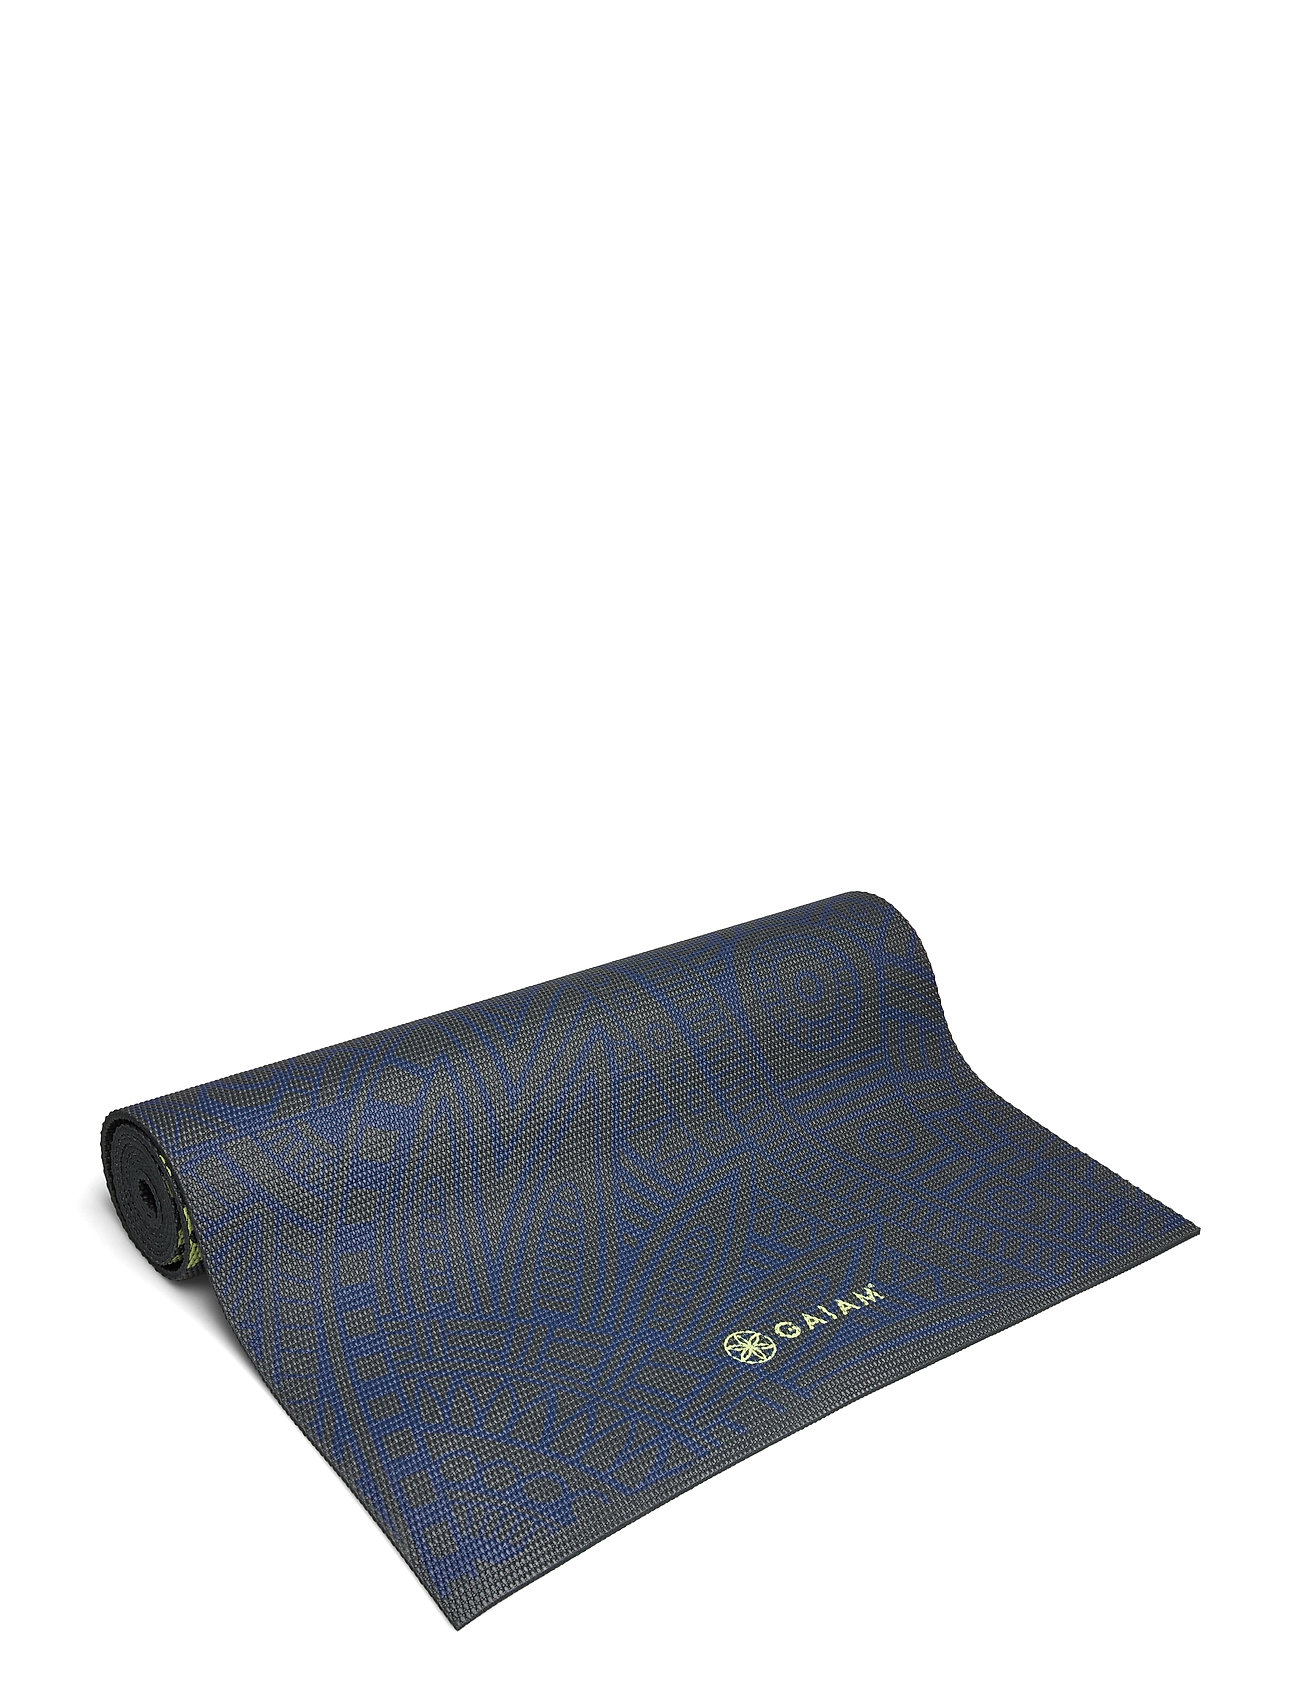 6mm Yoga Mat Sundial Layers Accessories Sports Equipment Yoga Equipment Yoga Mats And Accessories Musta Gaiam